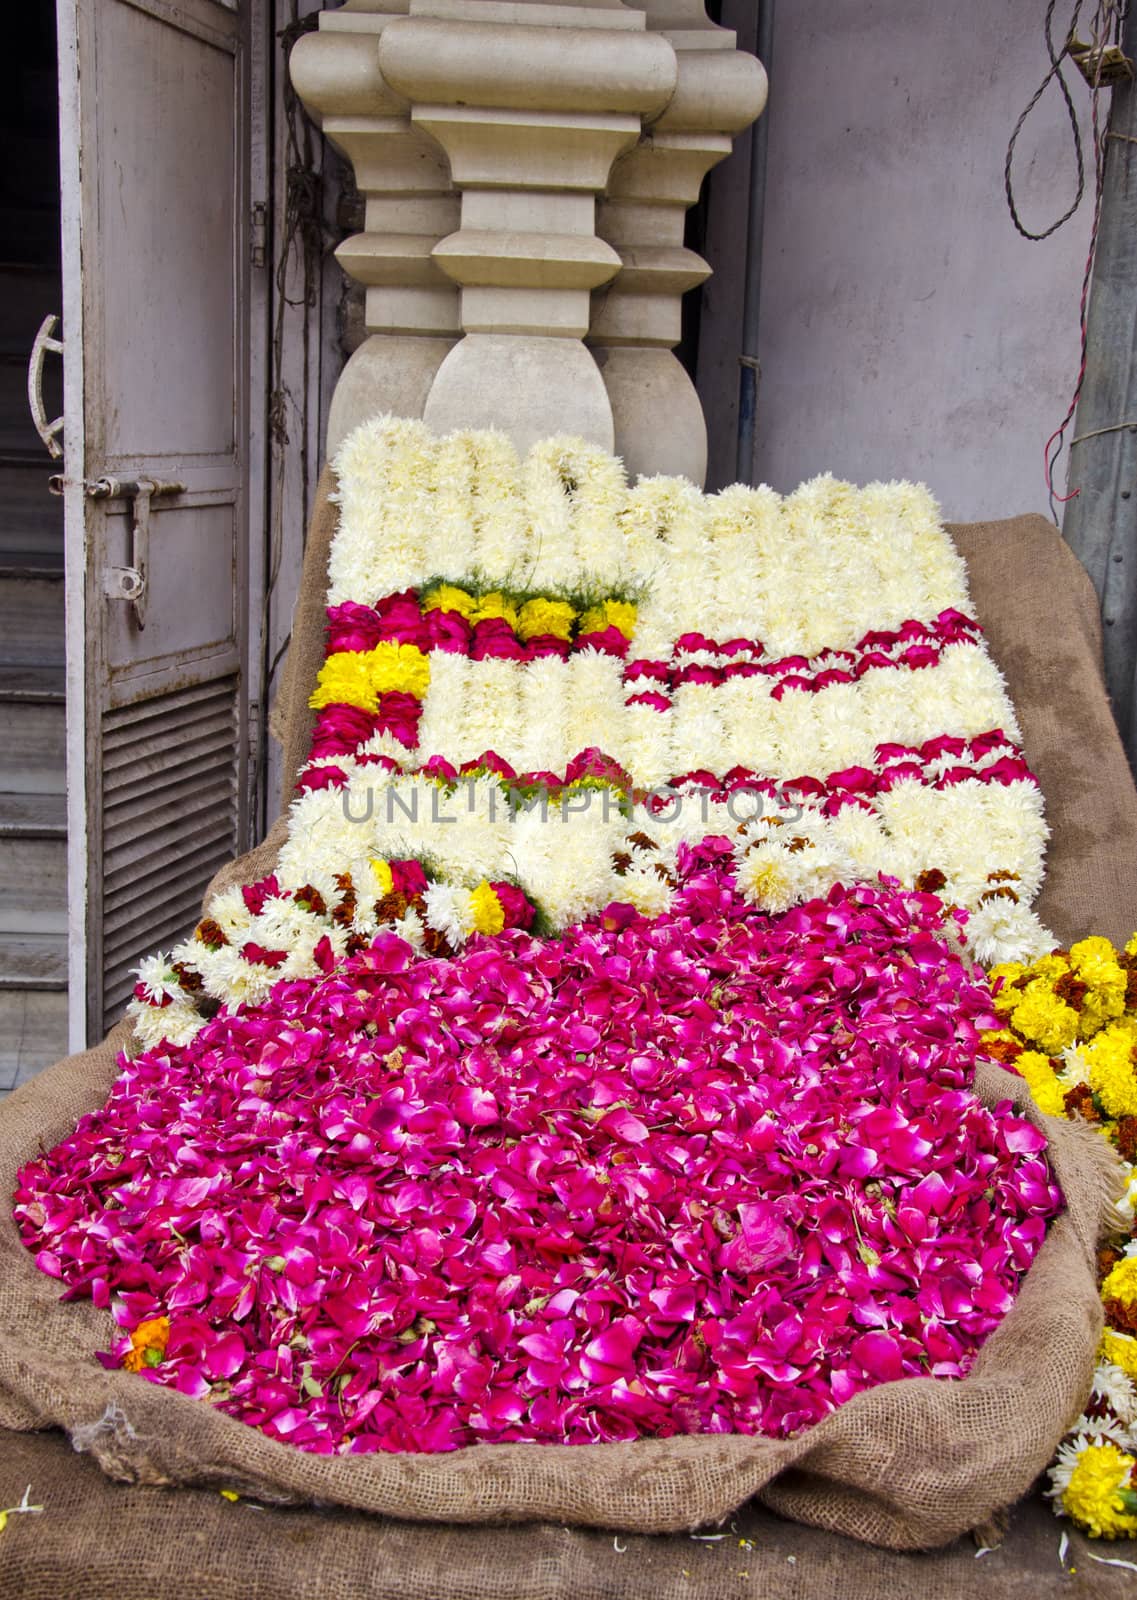 various flowers in Delhi street market, India